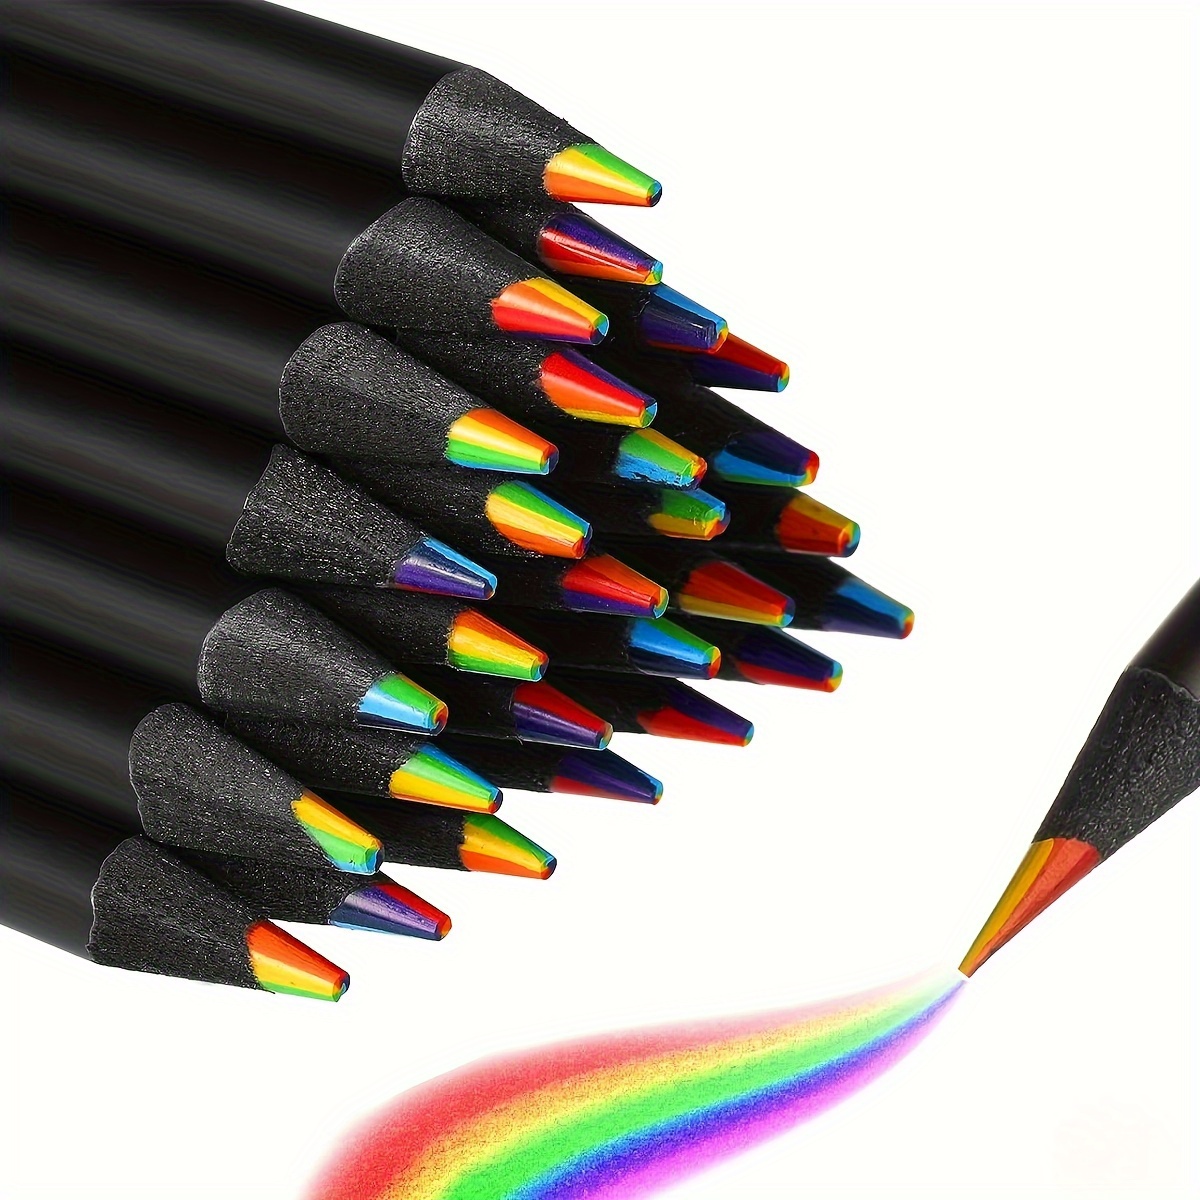 Rainbow Pencils 0.2 Inch Diameter Blackwood Pencils Art Drawing